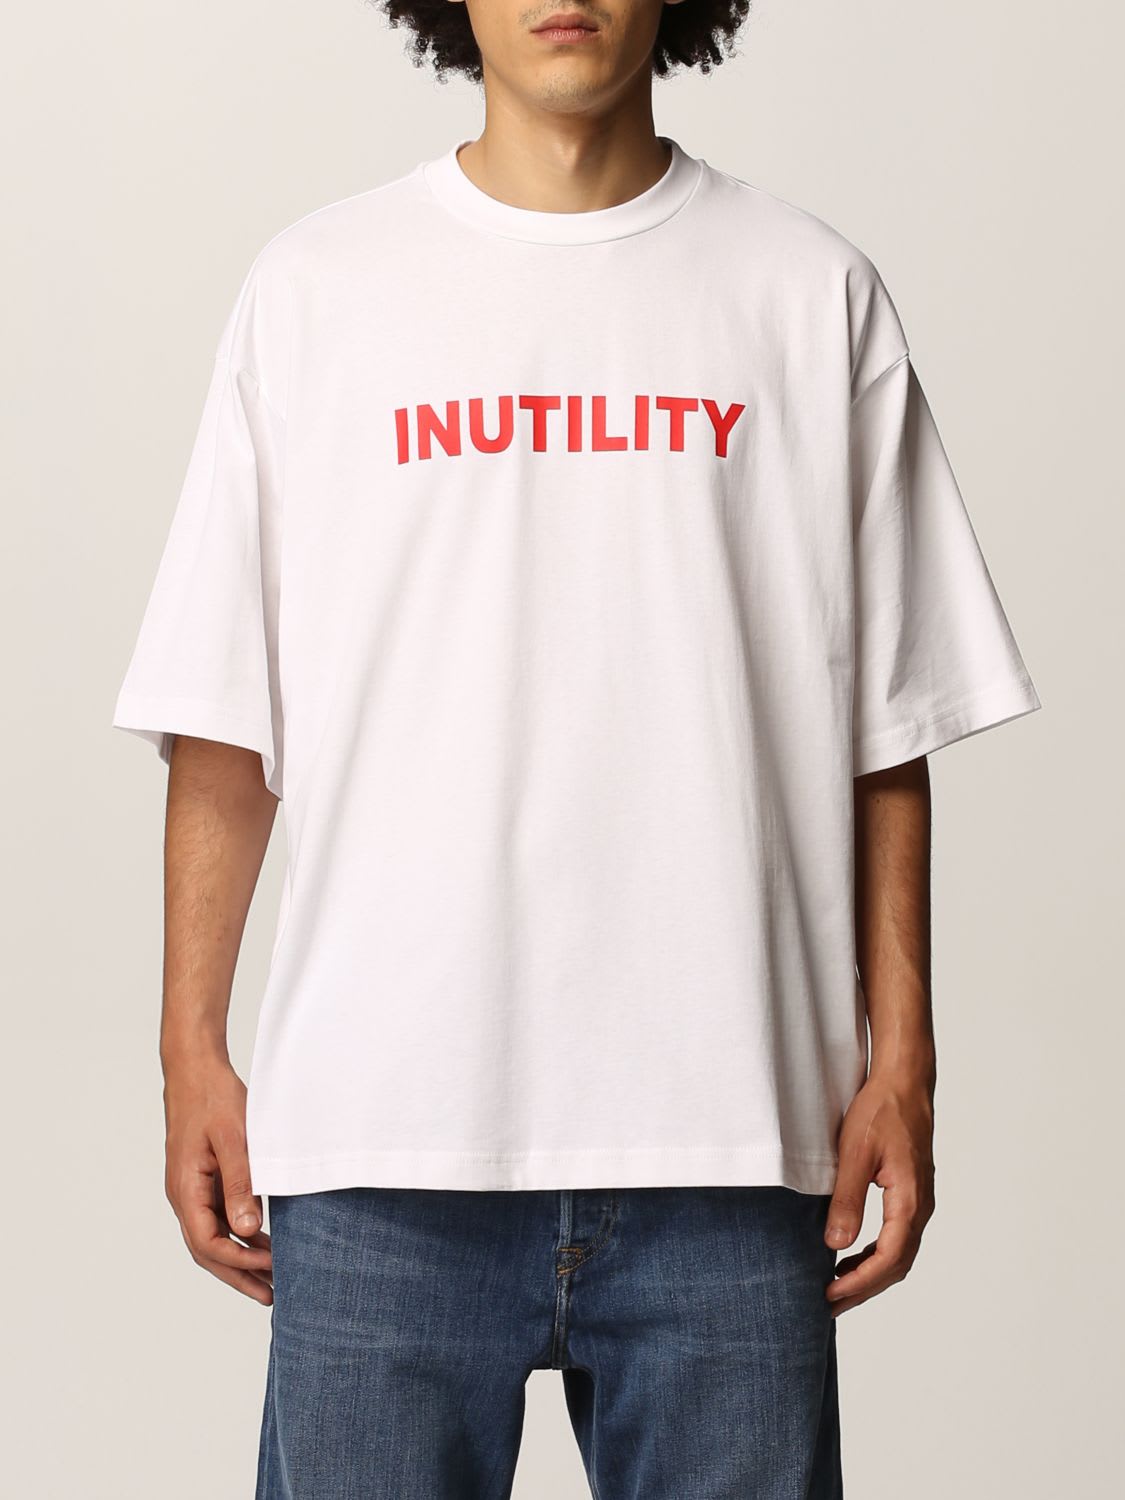 Diesel T-shirt Diesel Cotton T-shirt With Inutility Print